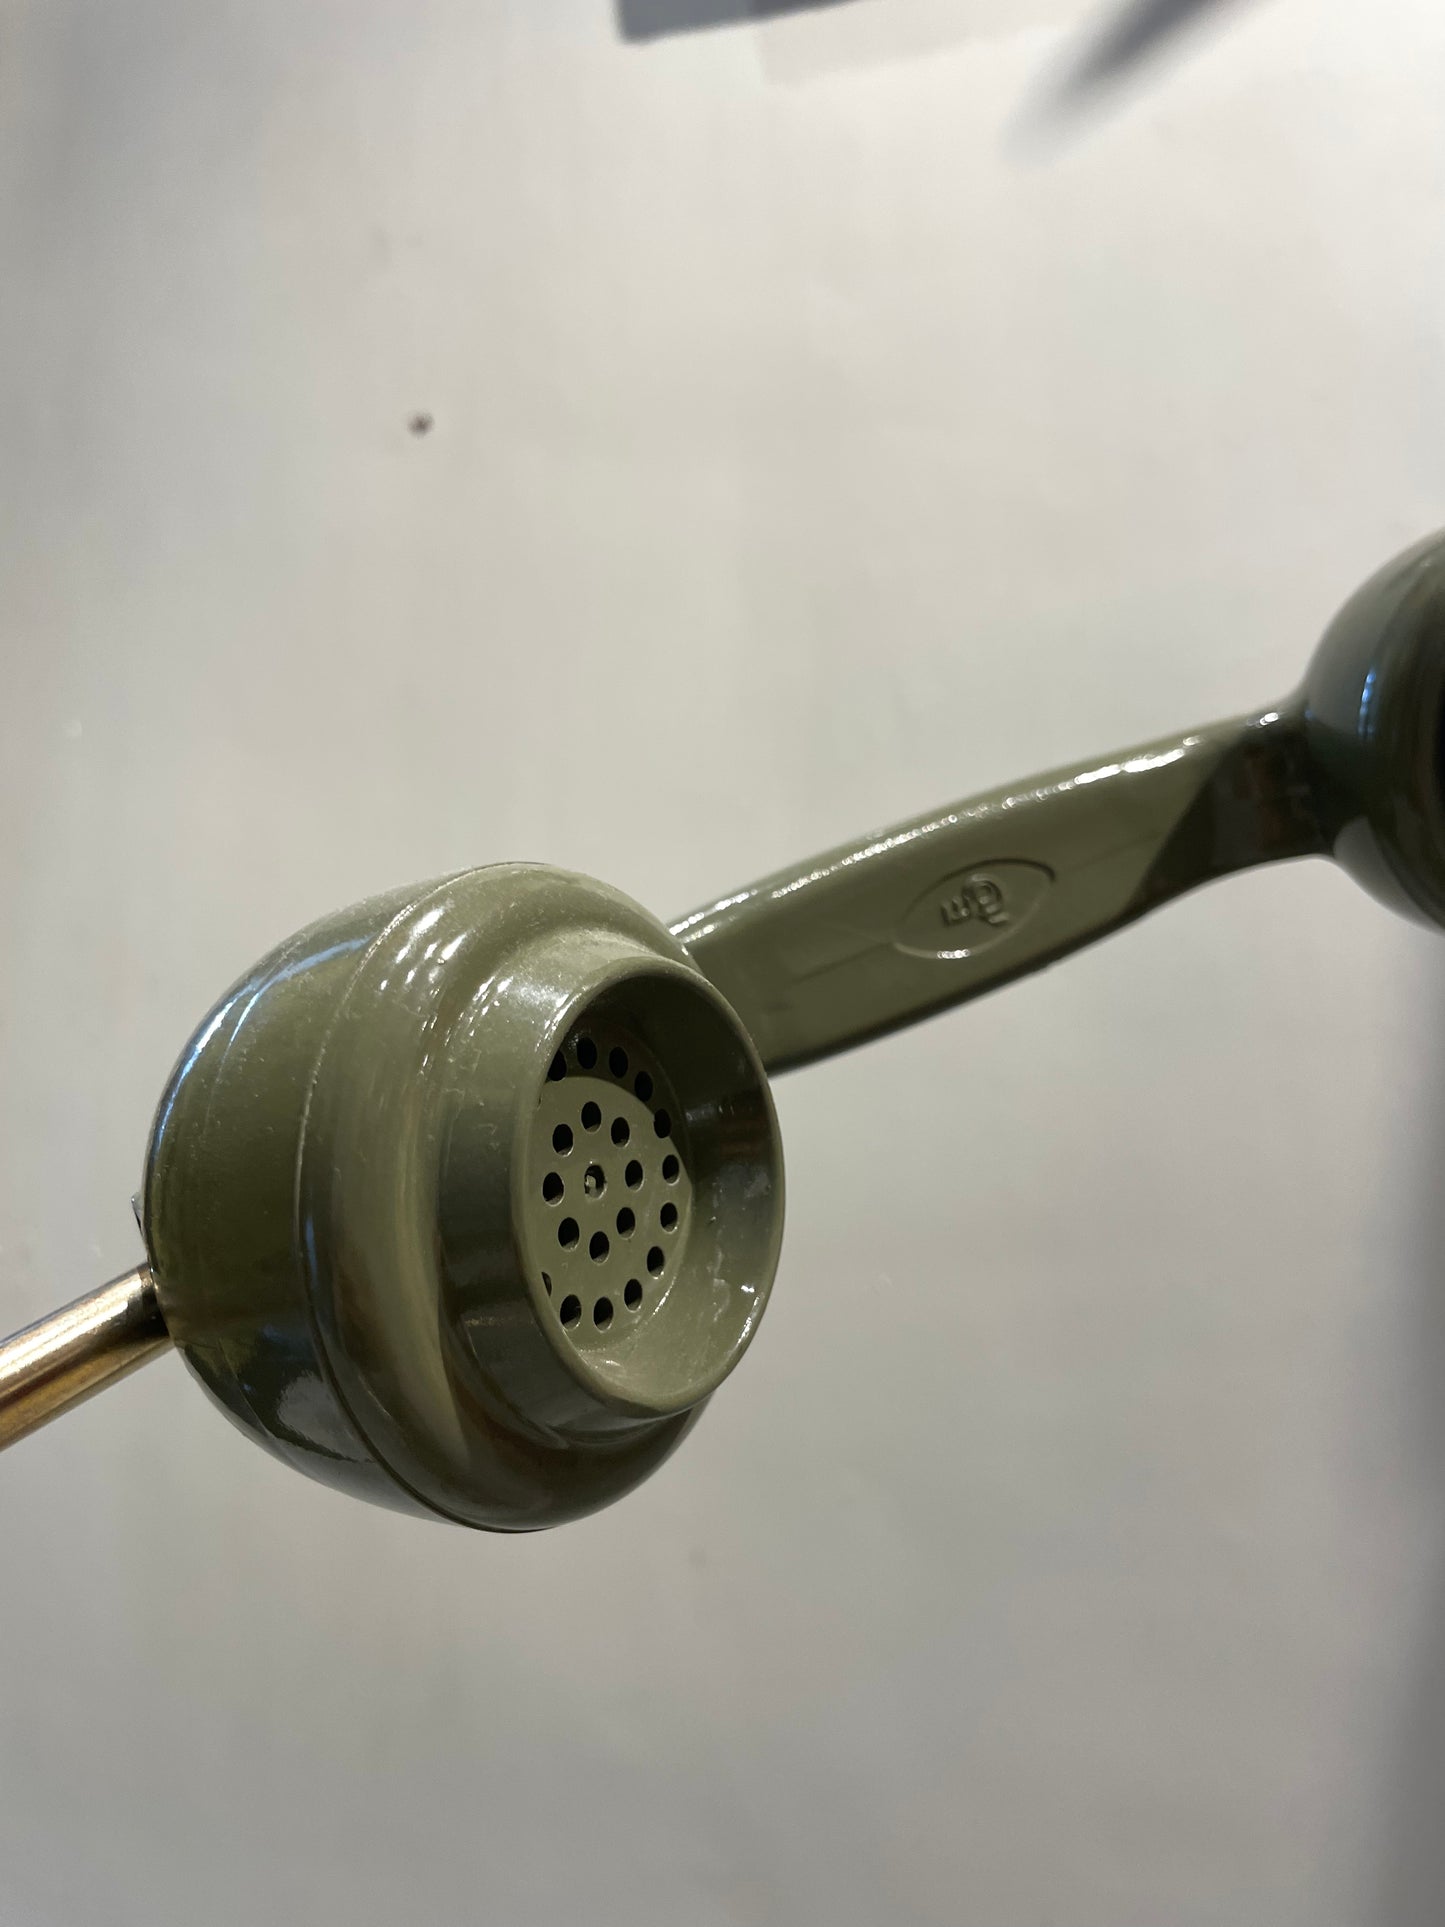 80s Rotary Phone Lamp (Olive)